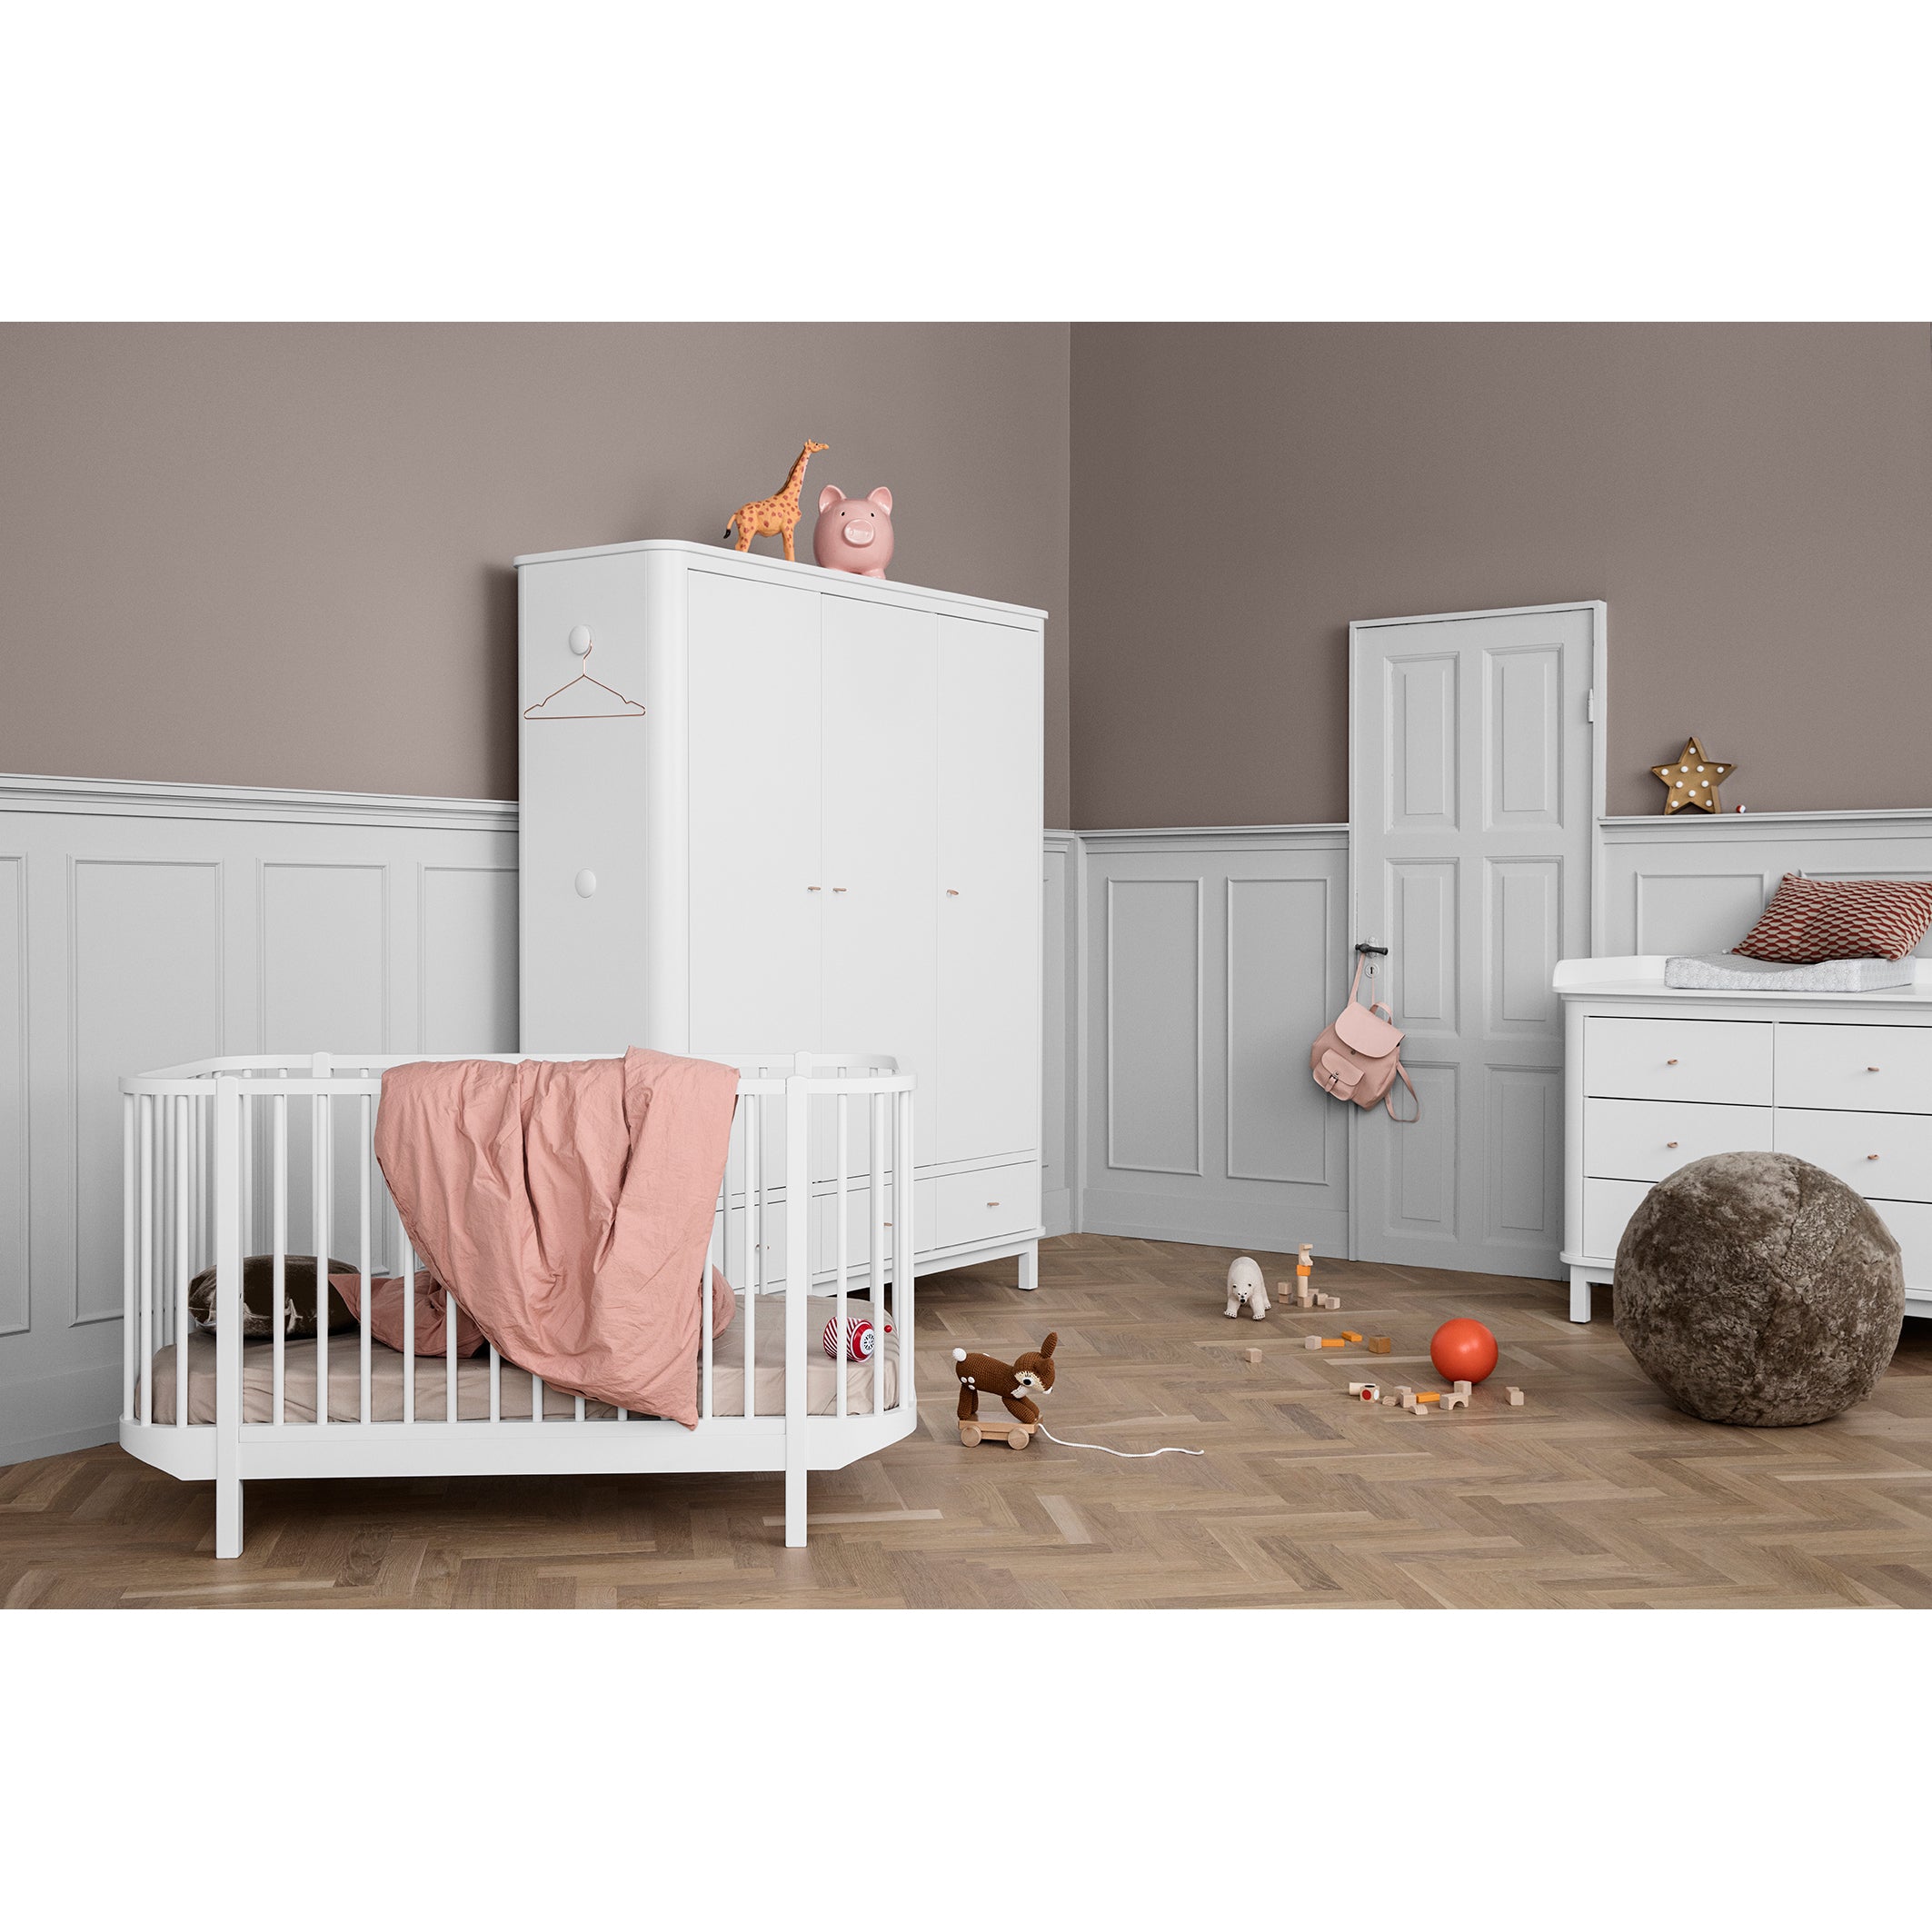 Oliver Furniture Wood 嬰兒床 白色